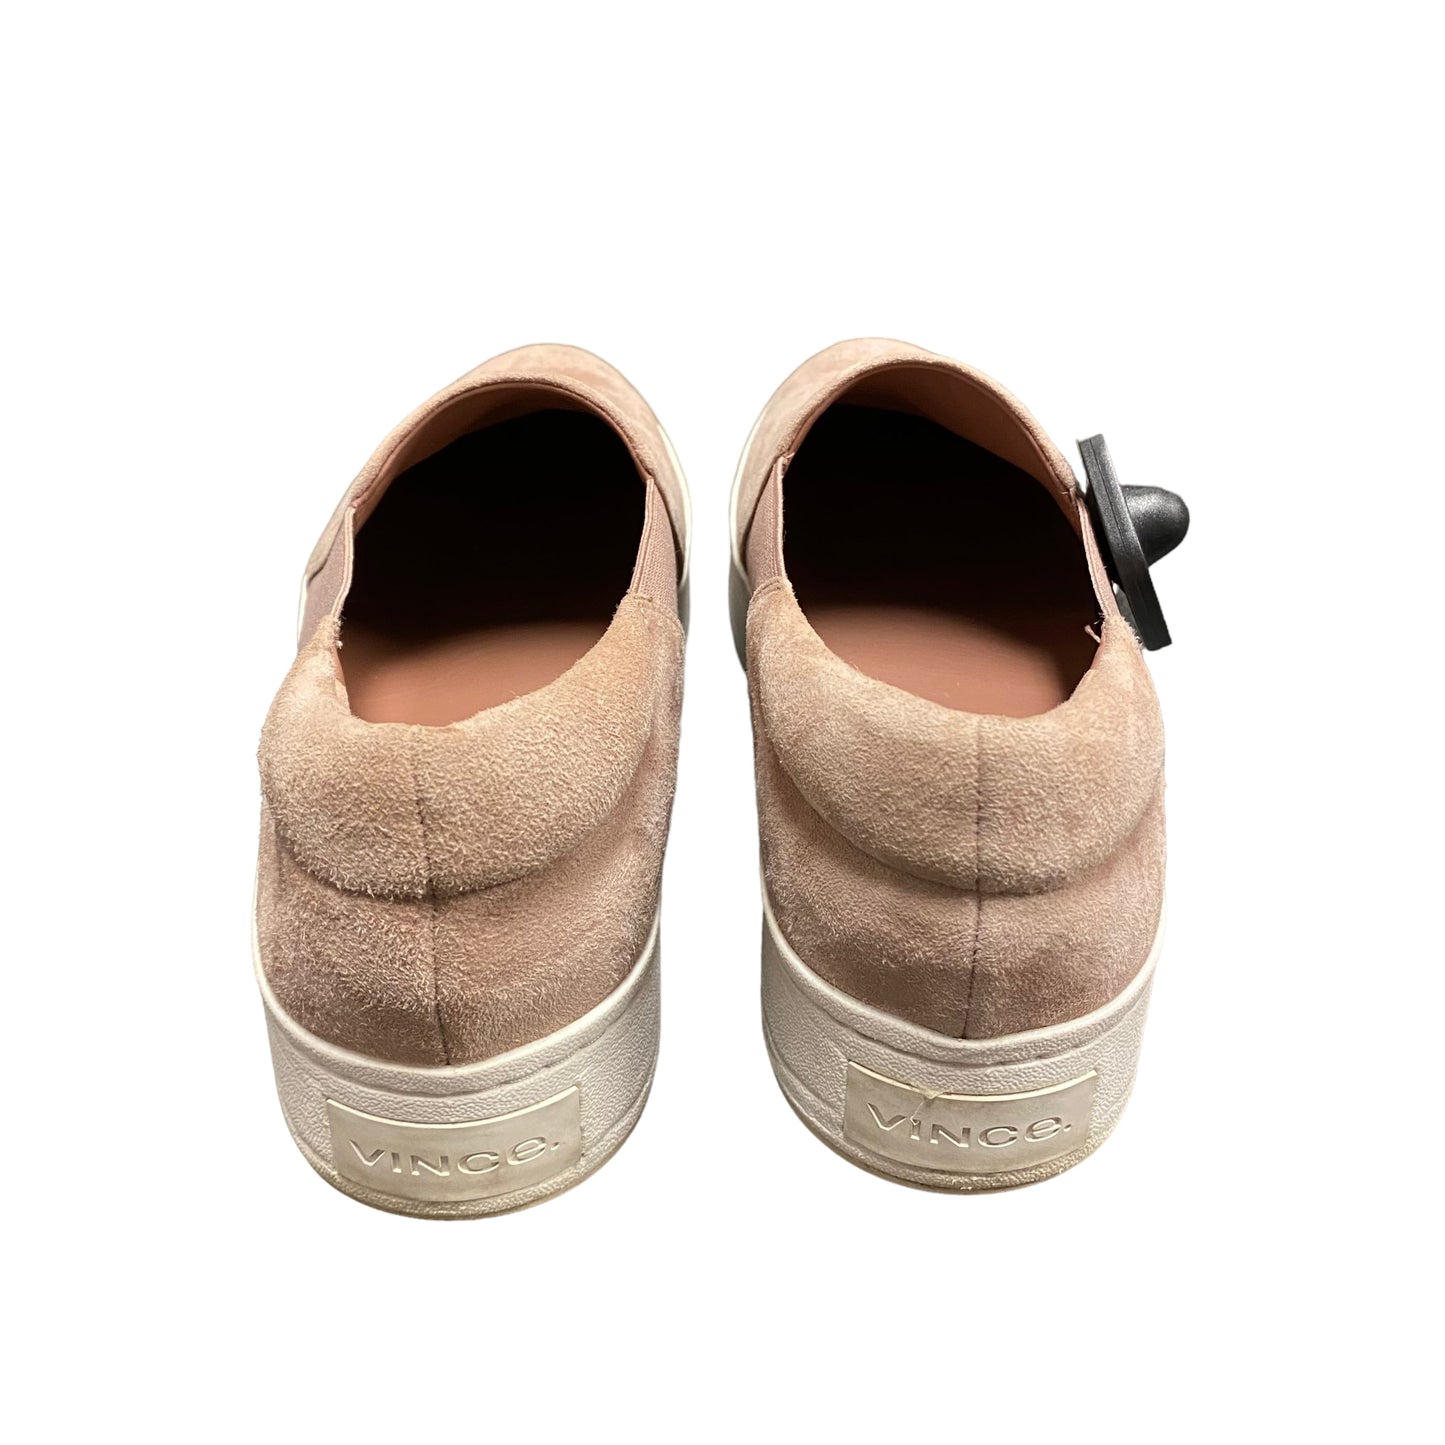 Shoes Heels Platform By Vince  Size: 8